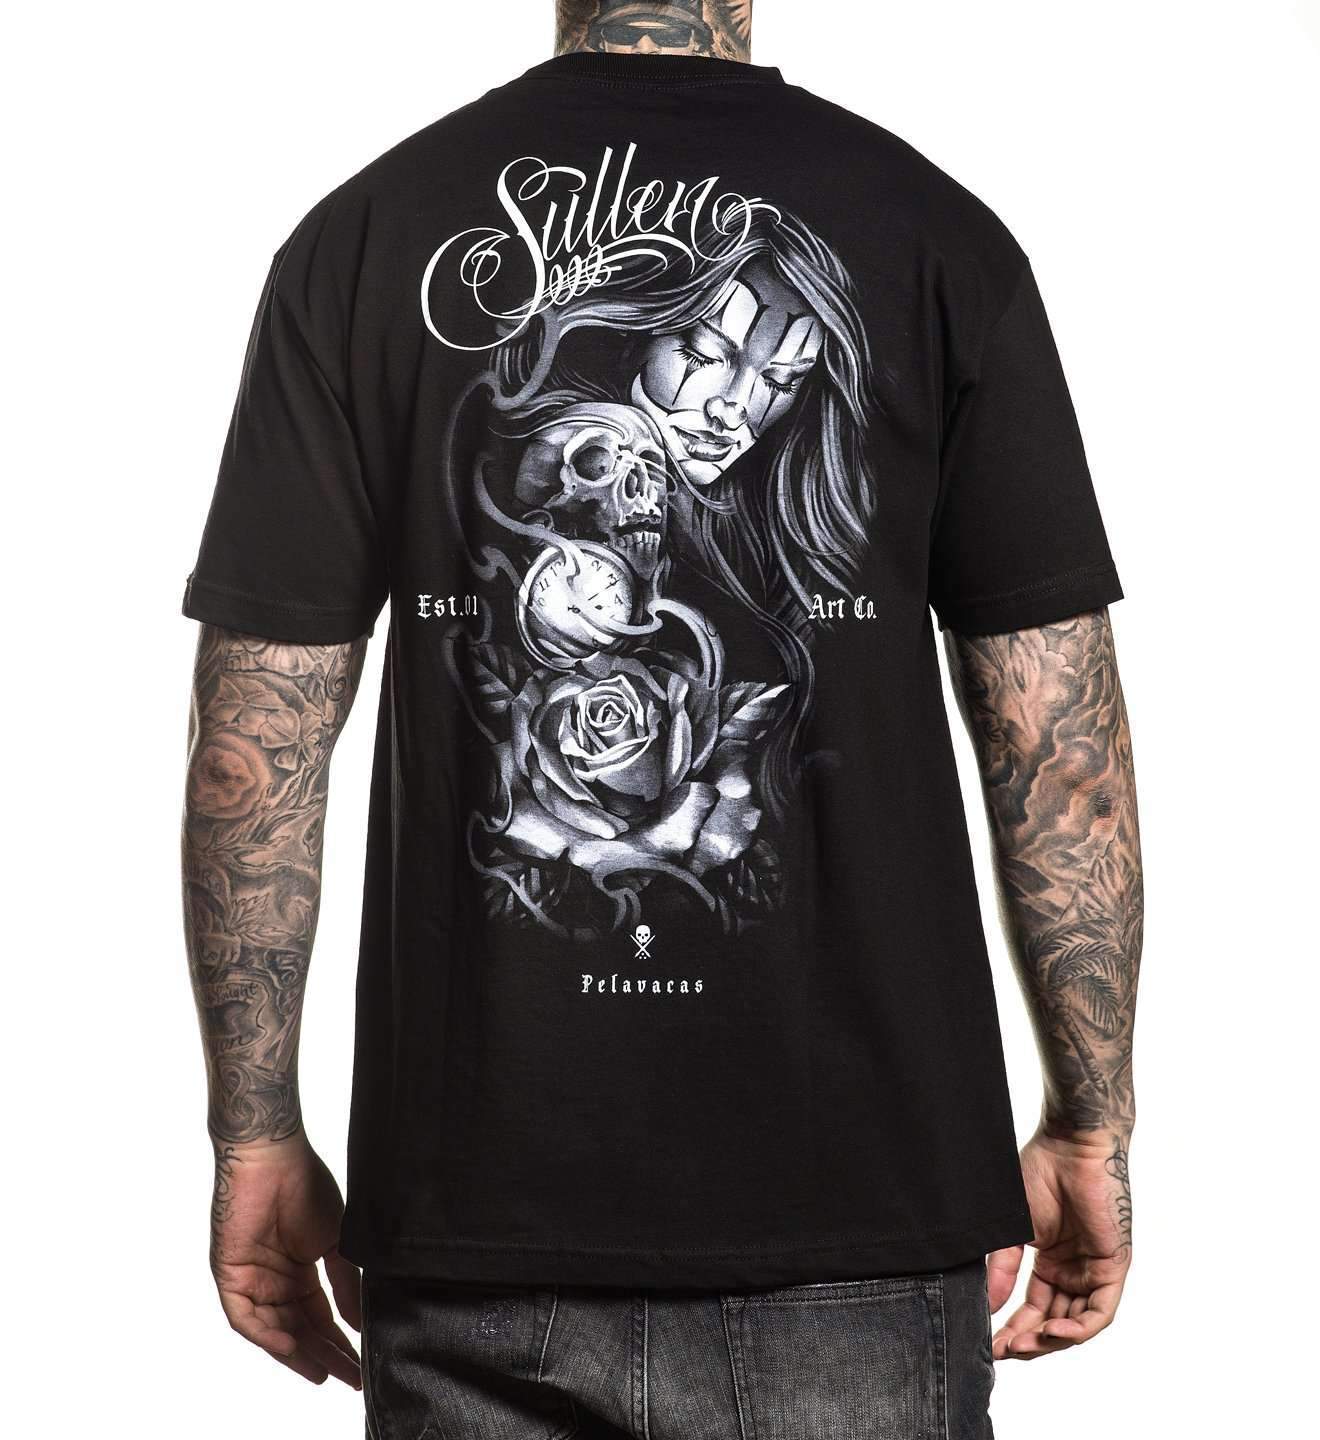 Футболка Sullen Art. Sullen Art Collective одежда. Sullen Dead hand футболка. Sullen Татуировка.